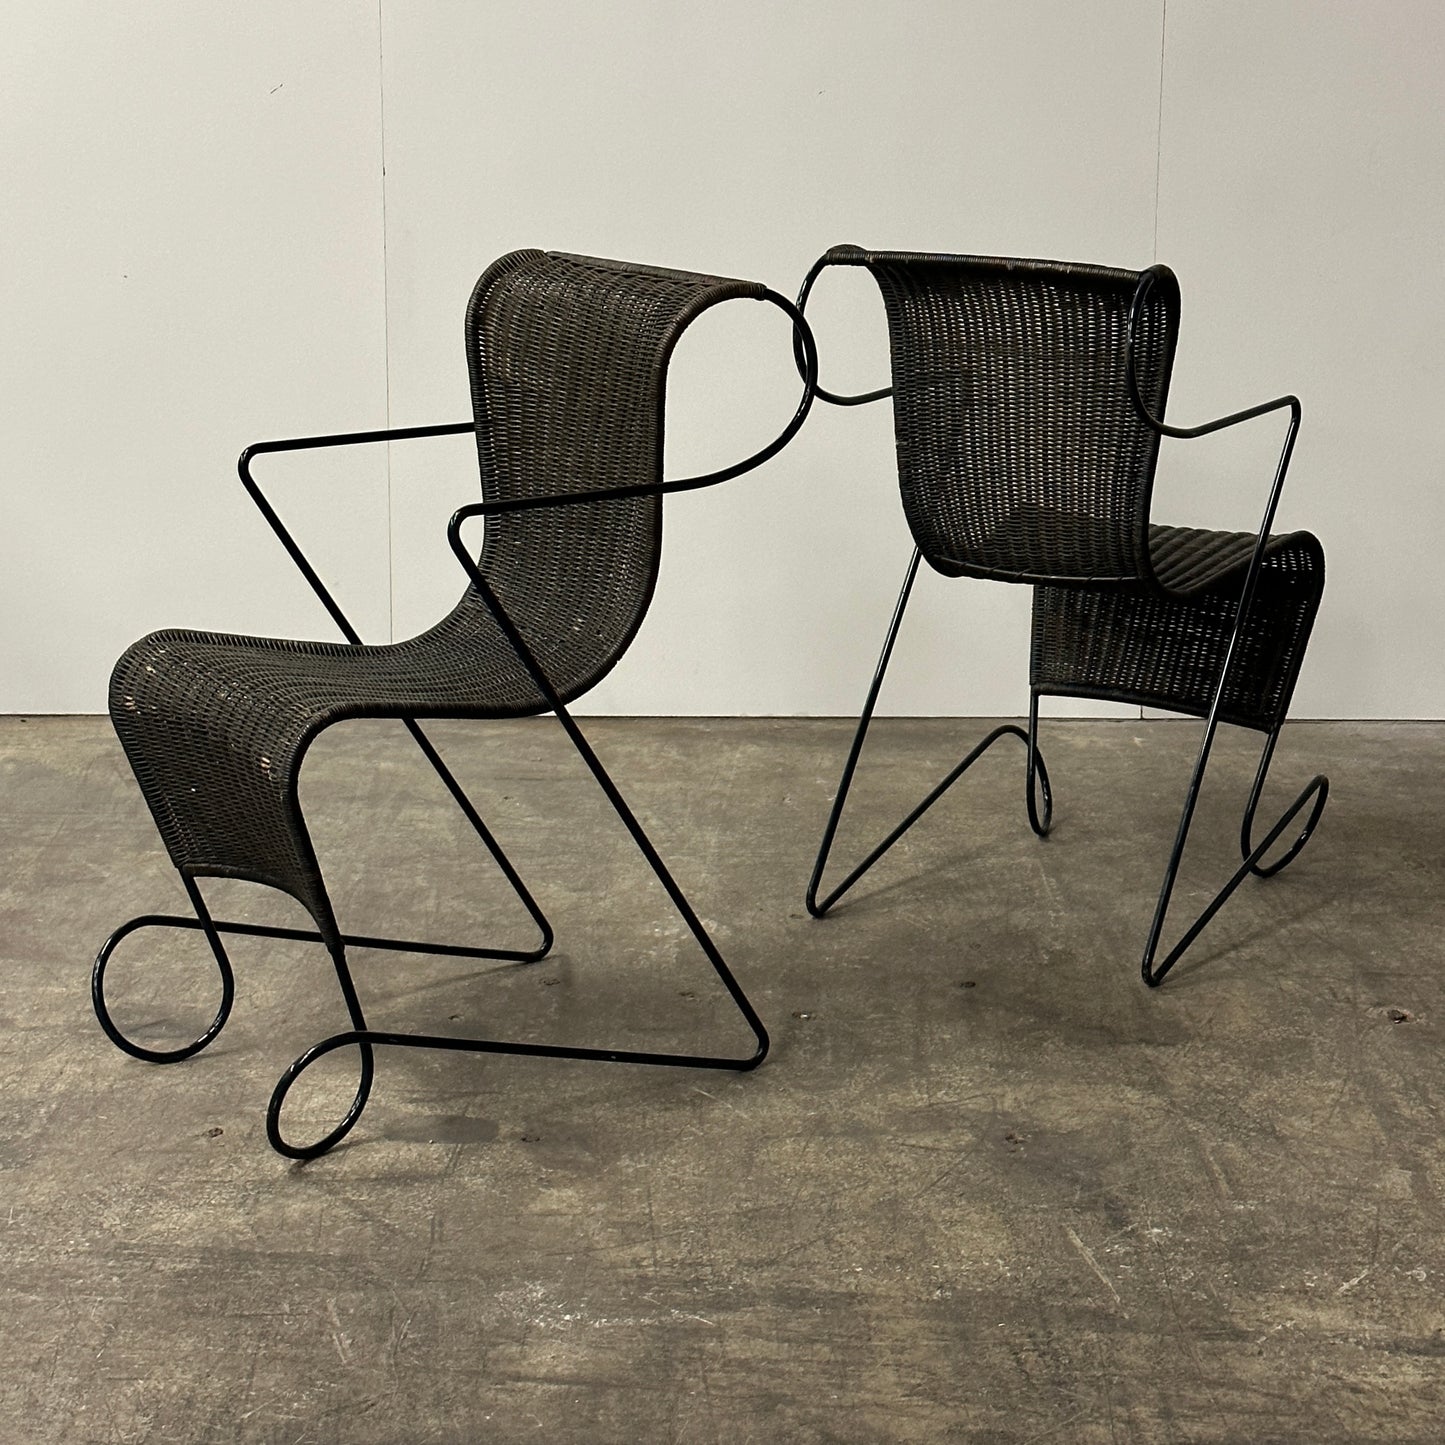 Zigo Chairs by Ron Arad for Driade